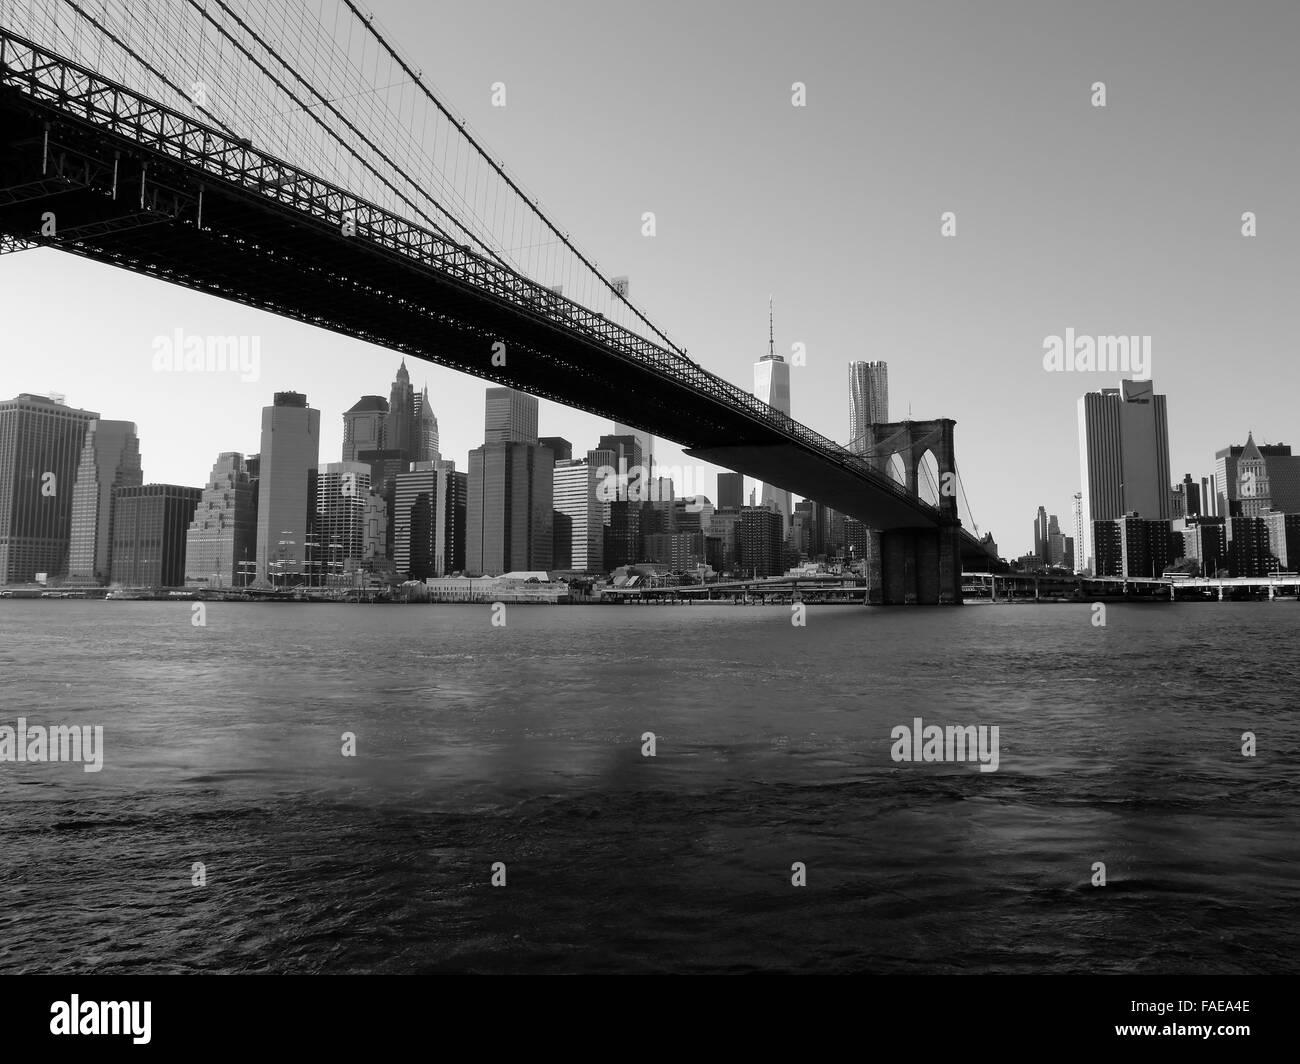 Brooklyn bridge in black and white Stock Photo